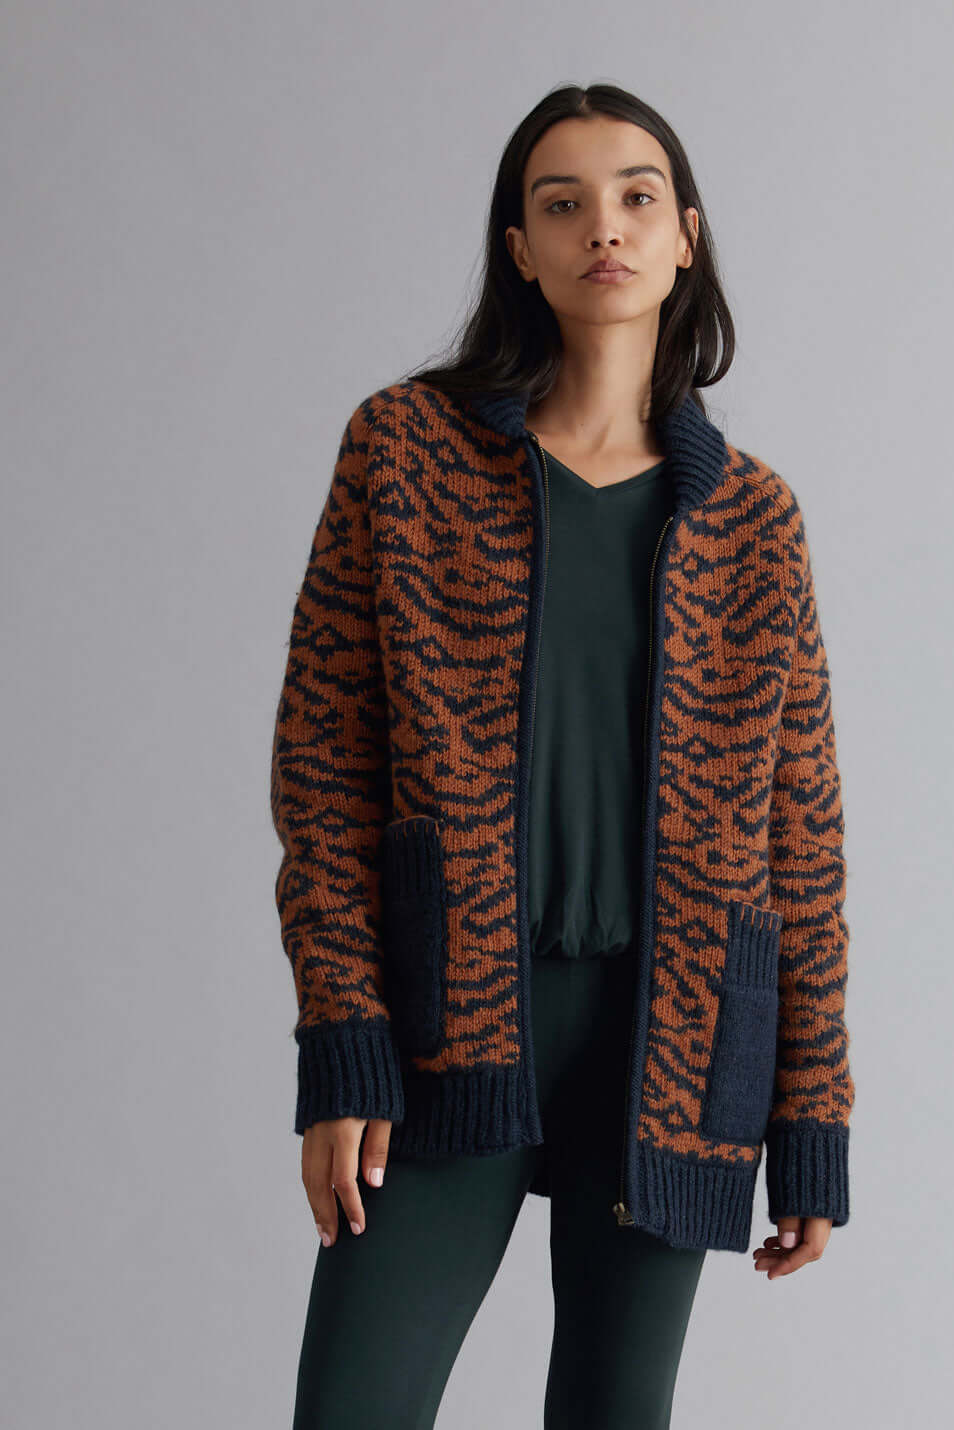 TIGER RUG Womens Lambswool Jacket Tiger Rug Jacquard, Size 2 / UK 10 / EUR 38